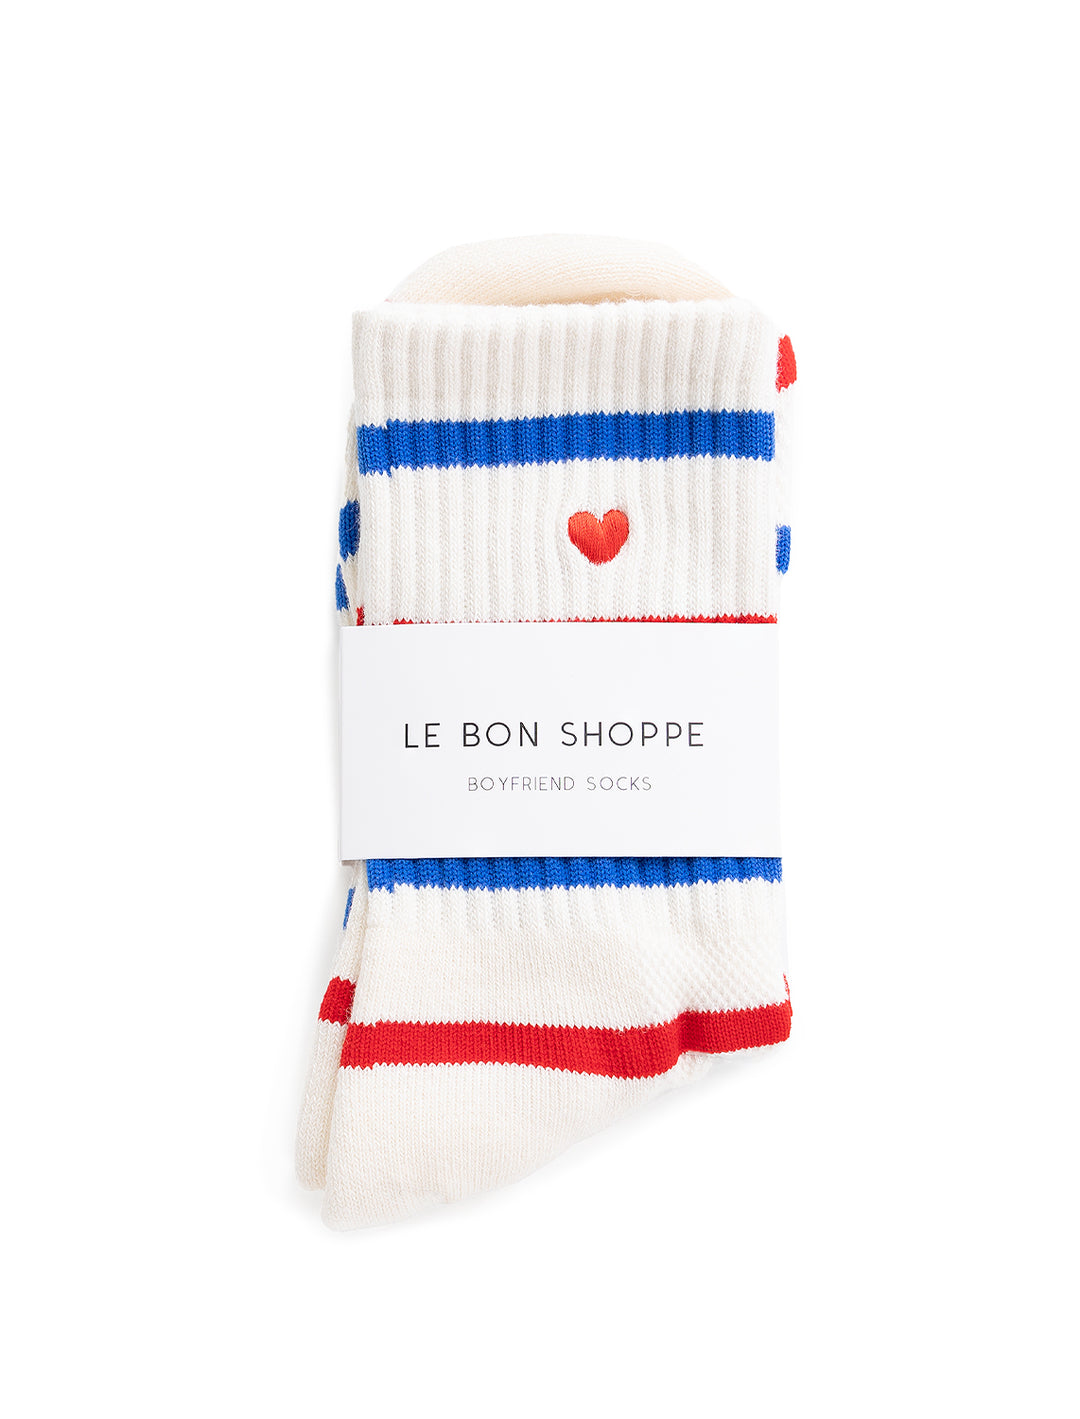 Overhead view of Le Bon Shoppe's embroidered heart striped boyfriend socks in leche